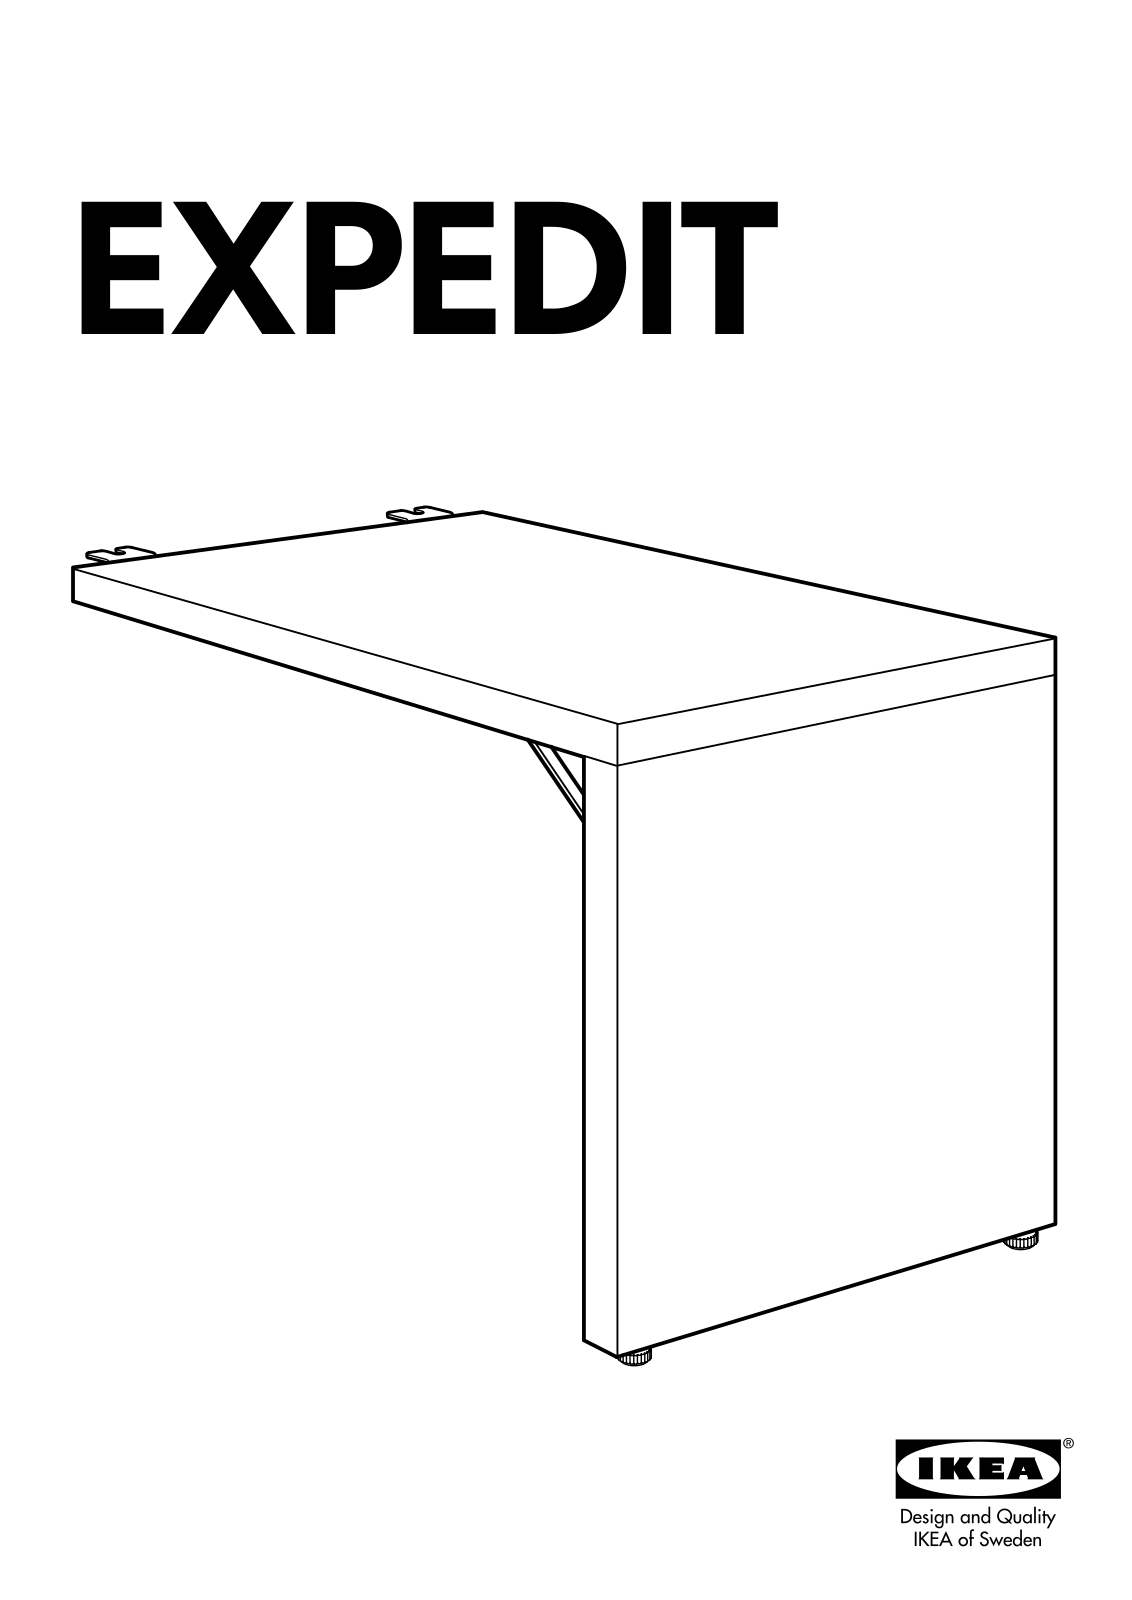 IKEA EXPEDIT User Manual